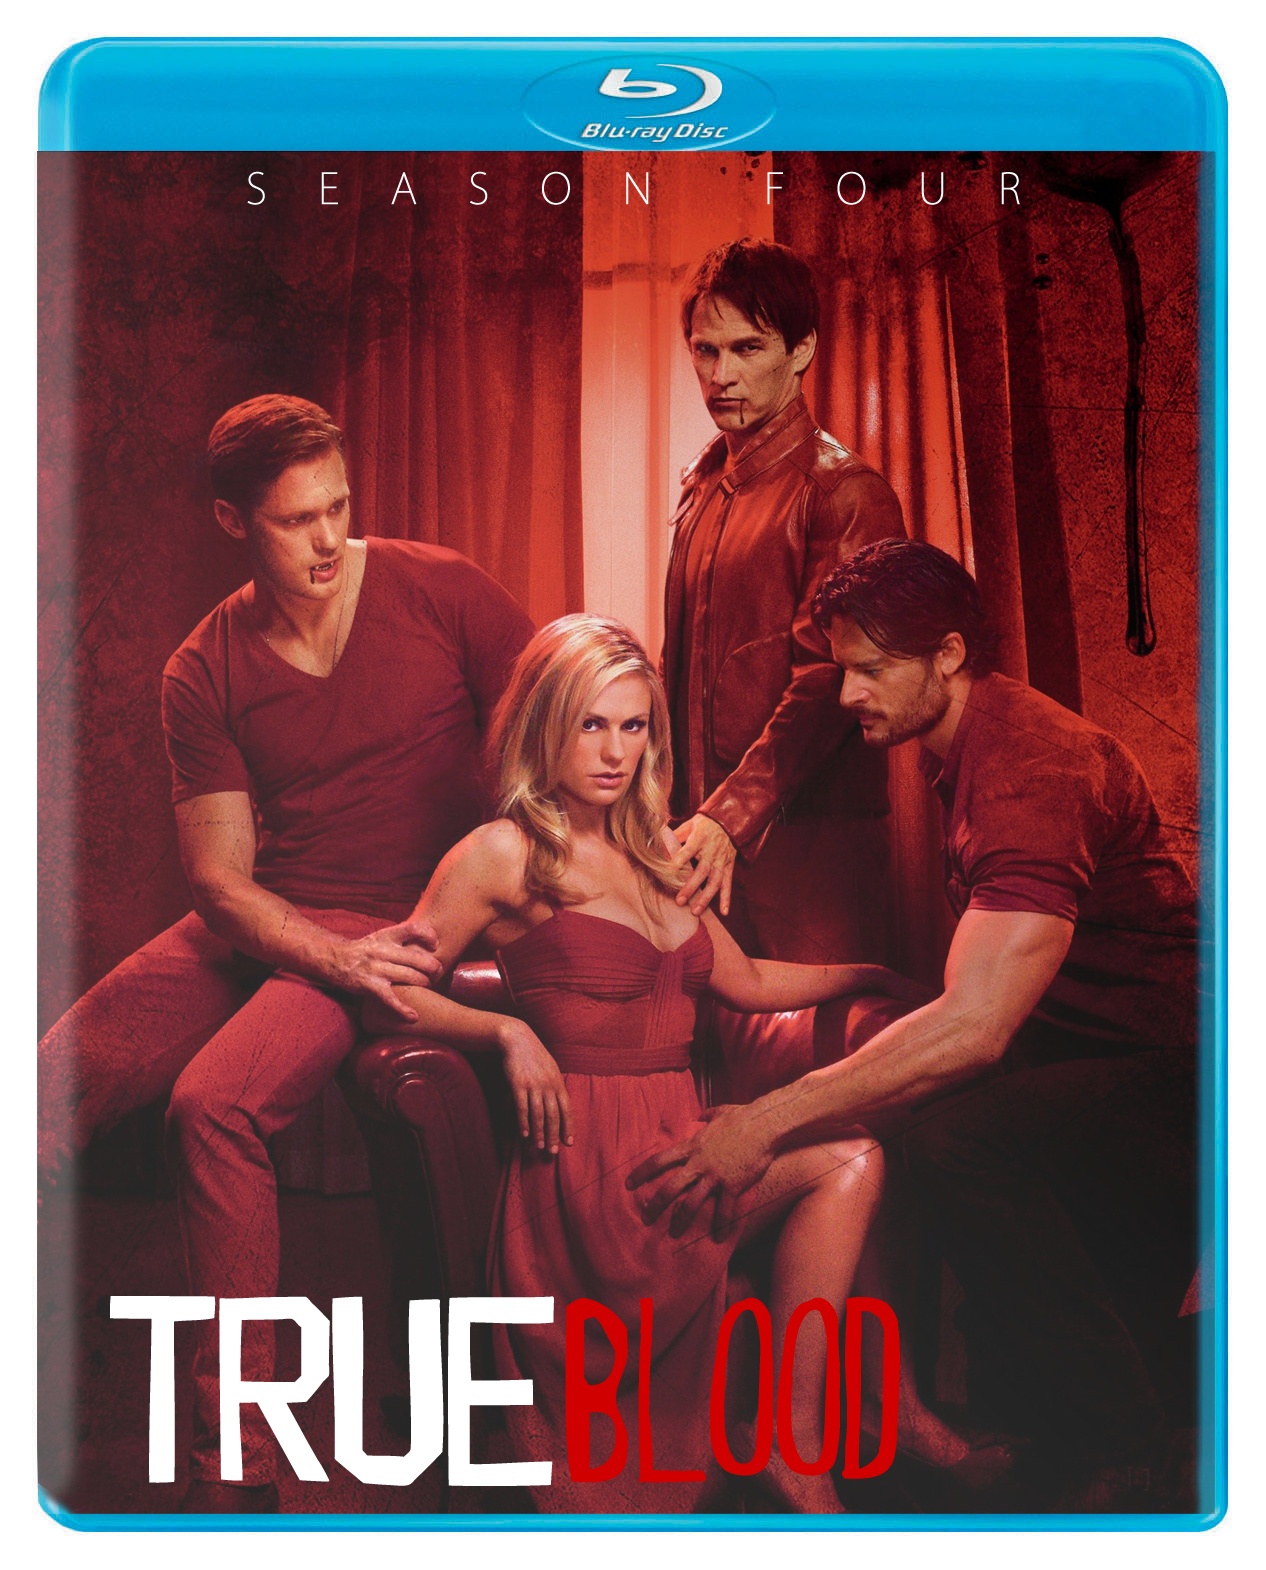 True Blood box cover